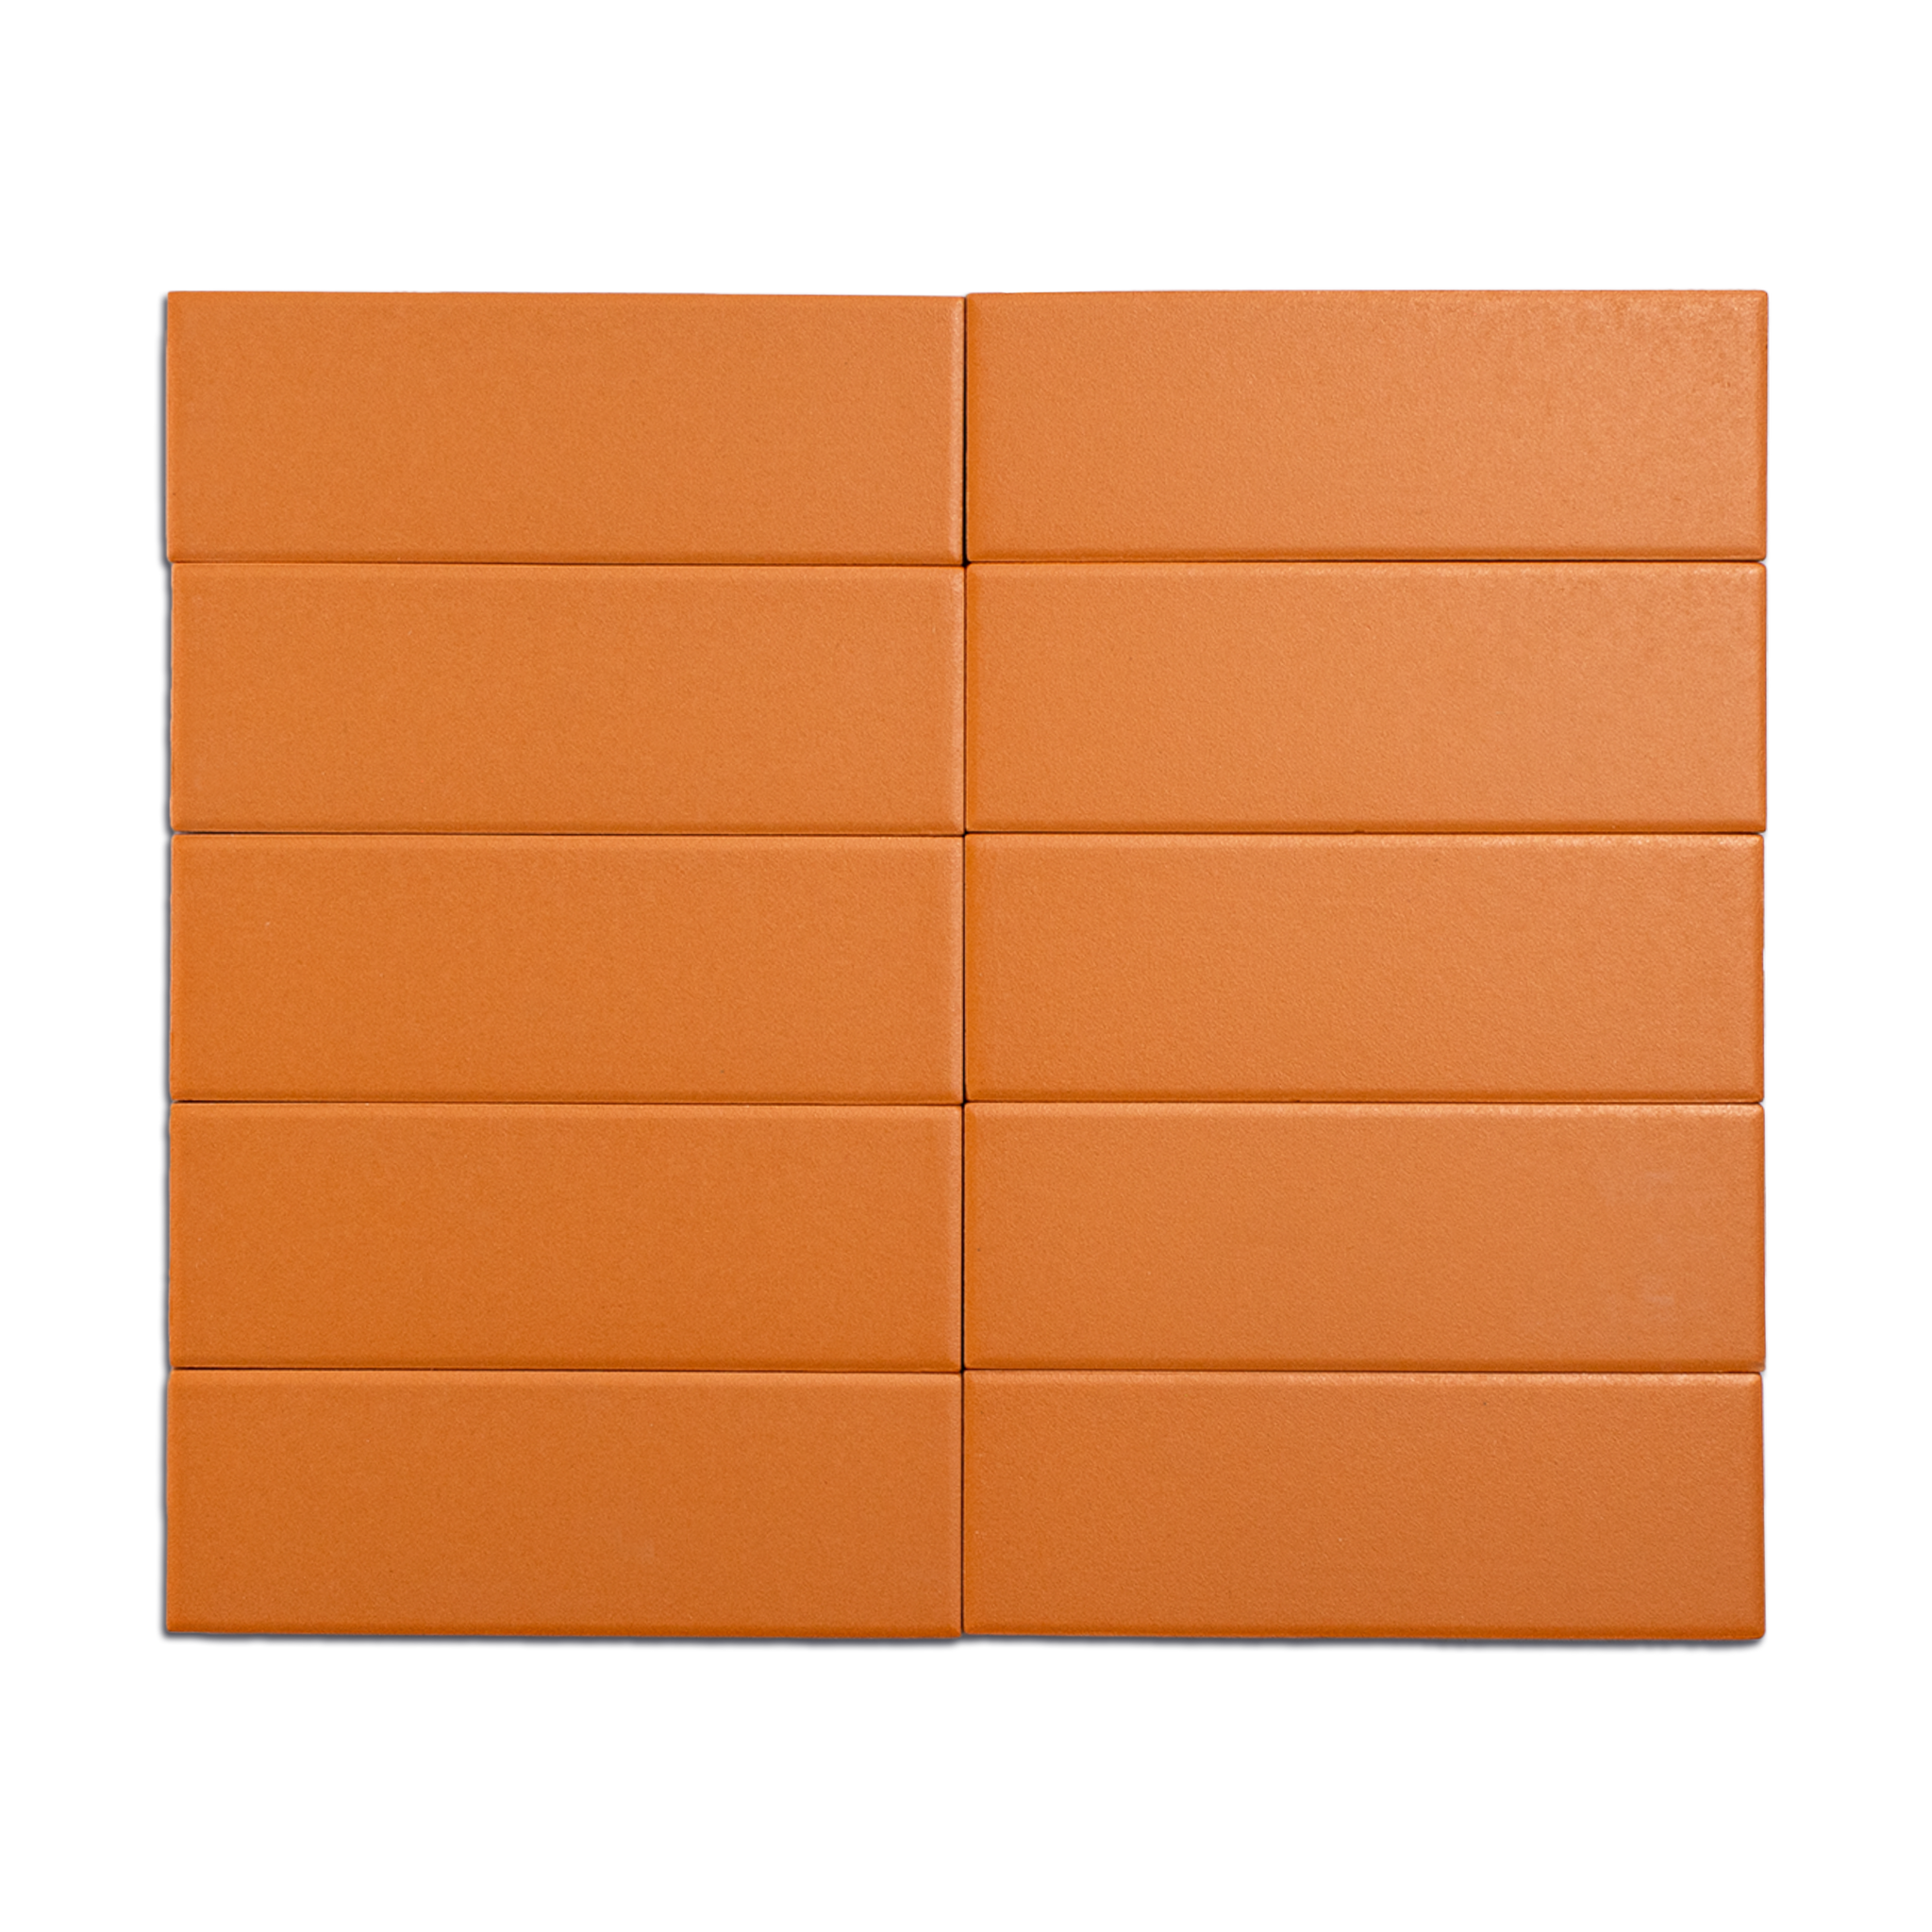 Trucco Rectangle Apricot 2x5.5 Full Body Porcelain Tile